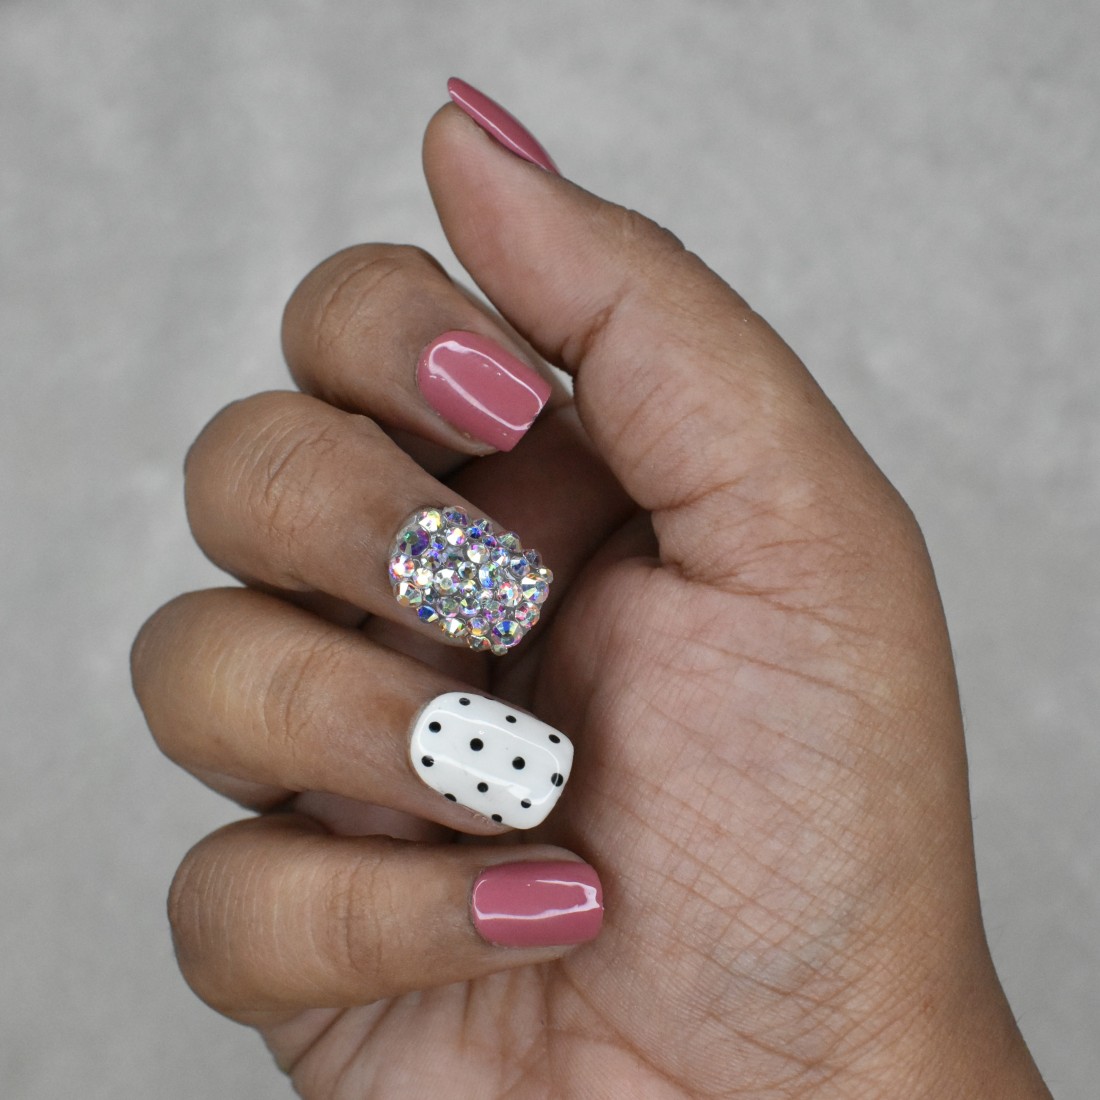 my nails in:kiss the bride pink, salty black dots nails by Olive&June ❤ | Black  dot nails, Champagne nails, Sheer nails